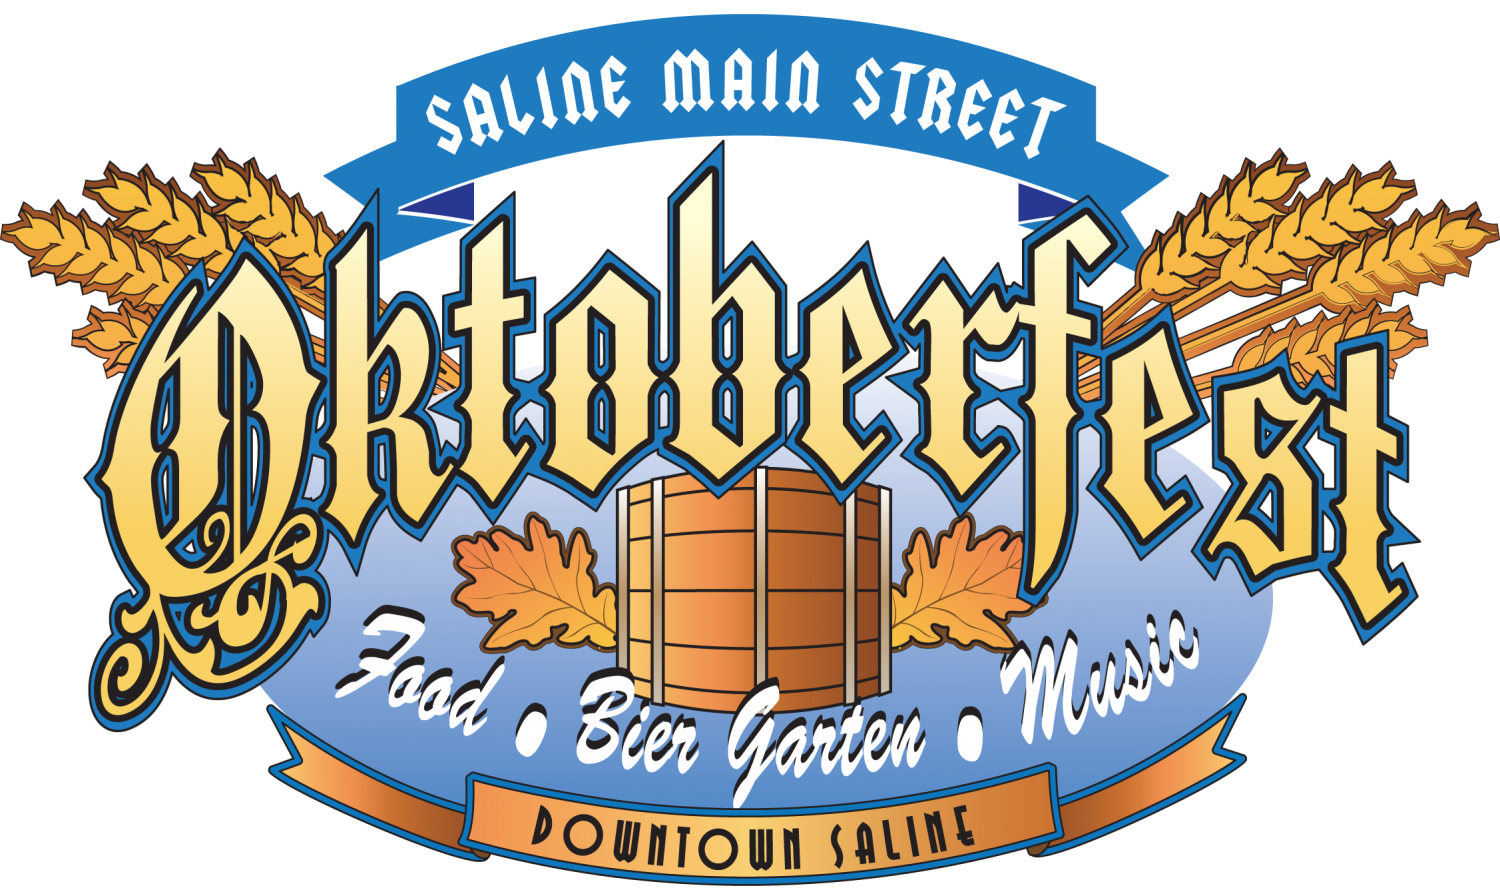 Beer tent graphics illustrations. Oktoberfest clipart logo